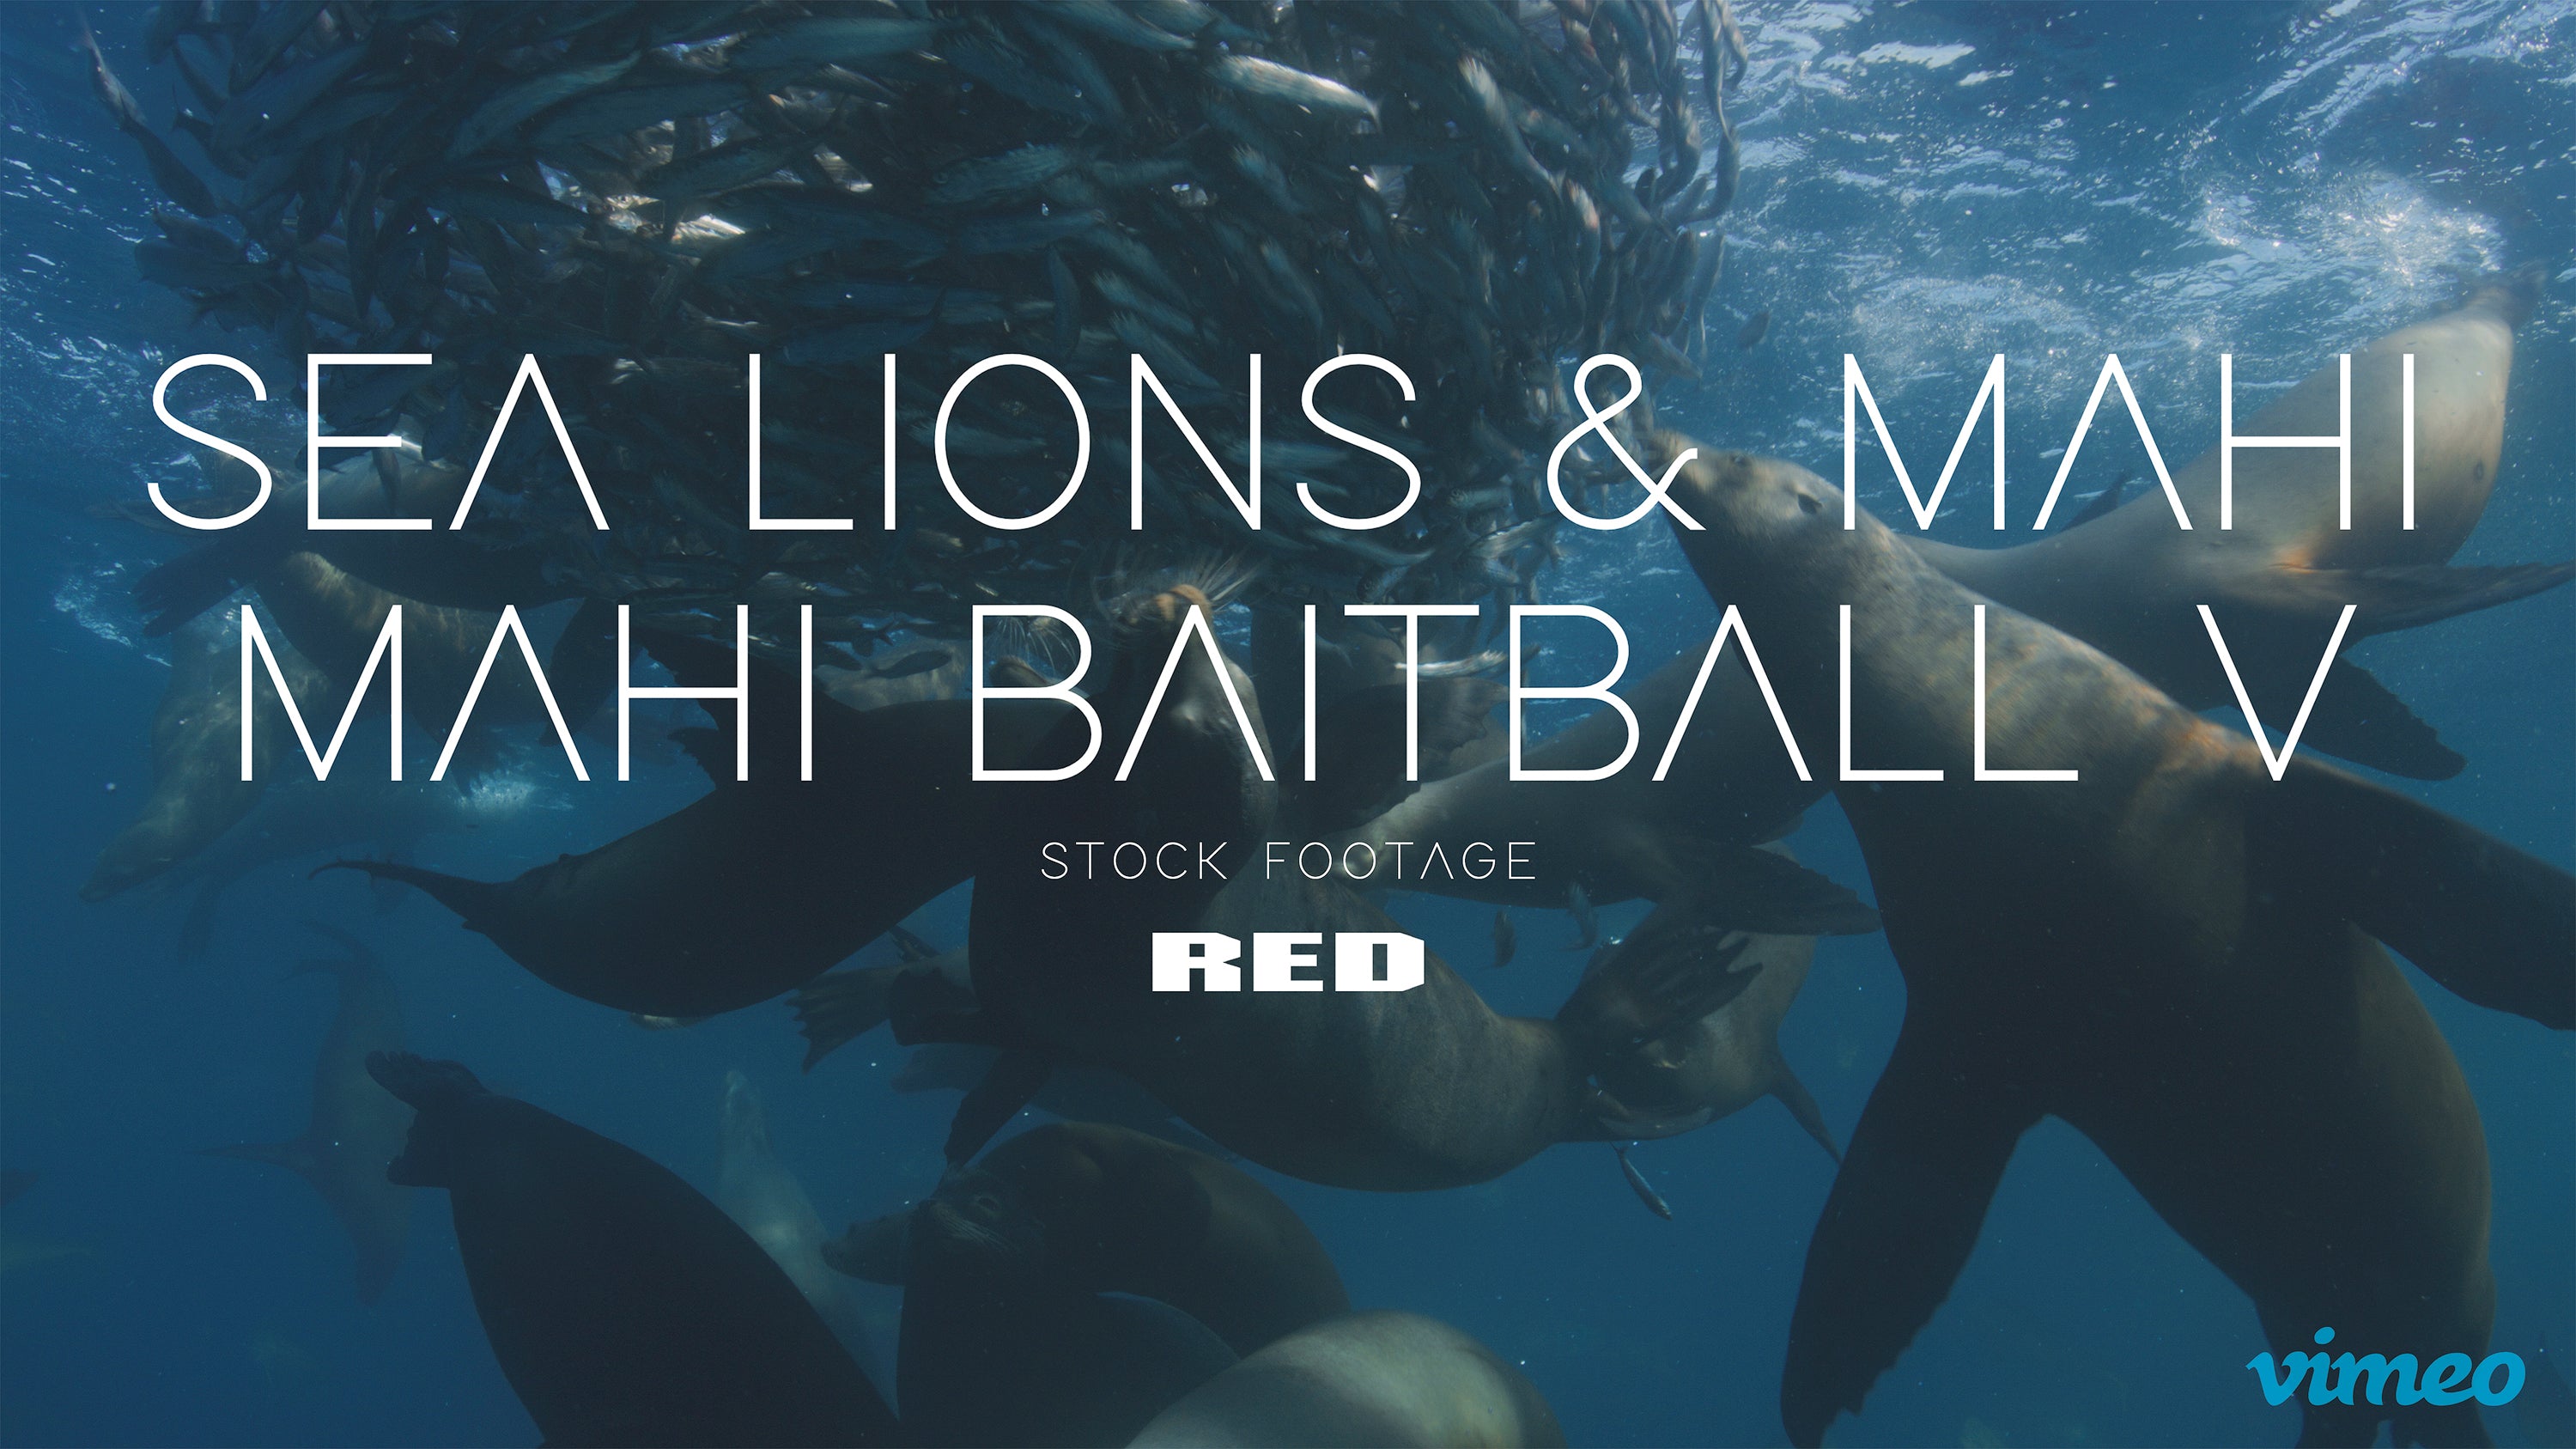 Sea lions & Mahi mahi baitball V